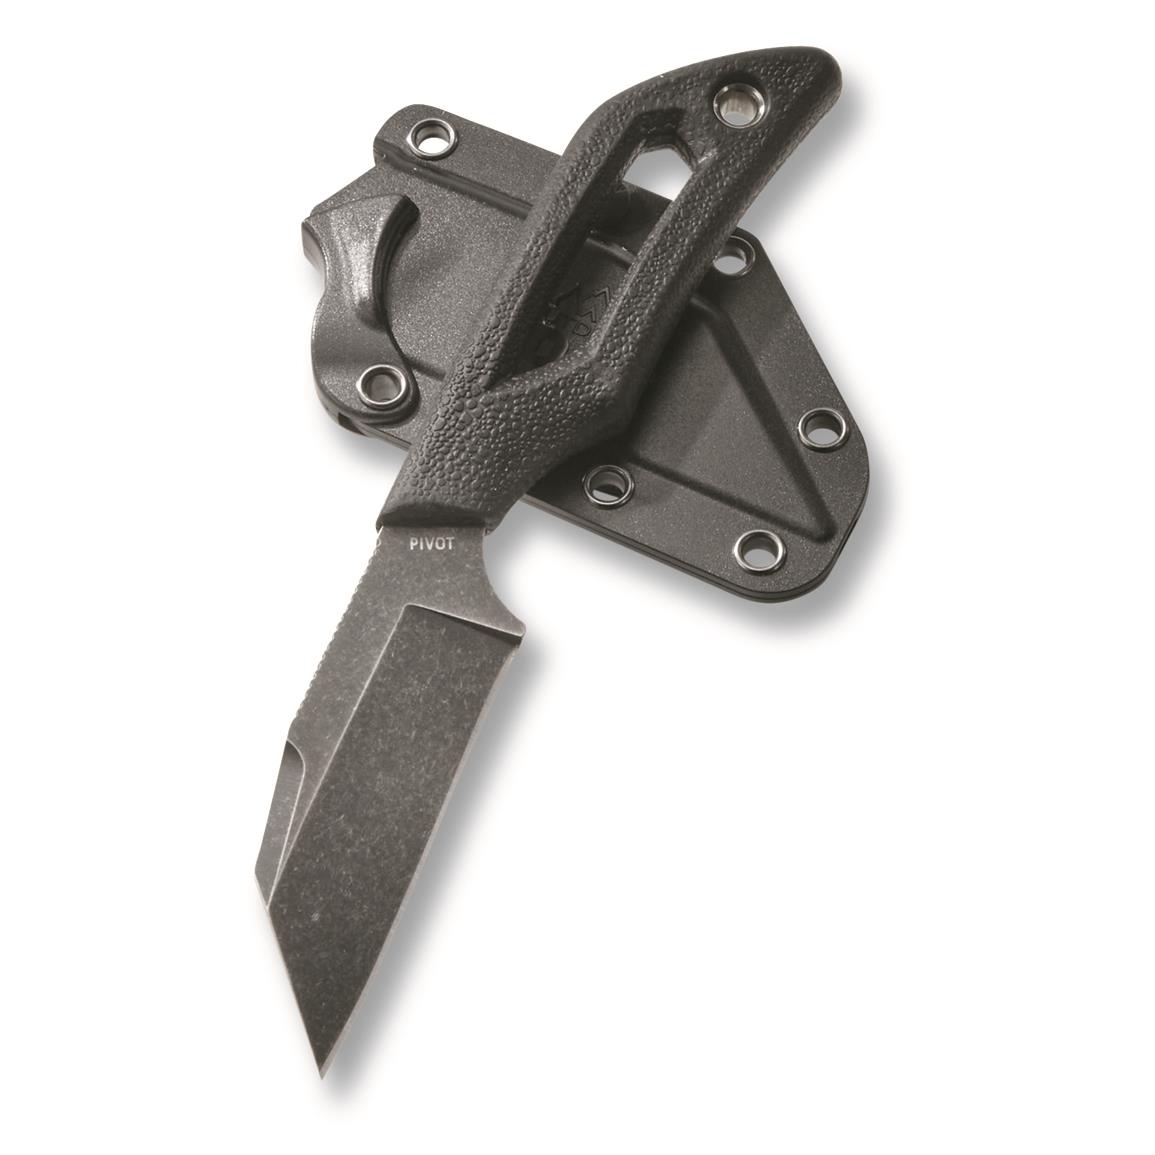 Outdoor Edge Pivot Wharncliffe Knife, Black